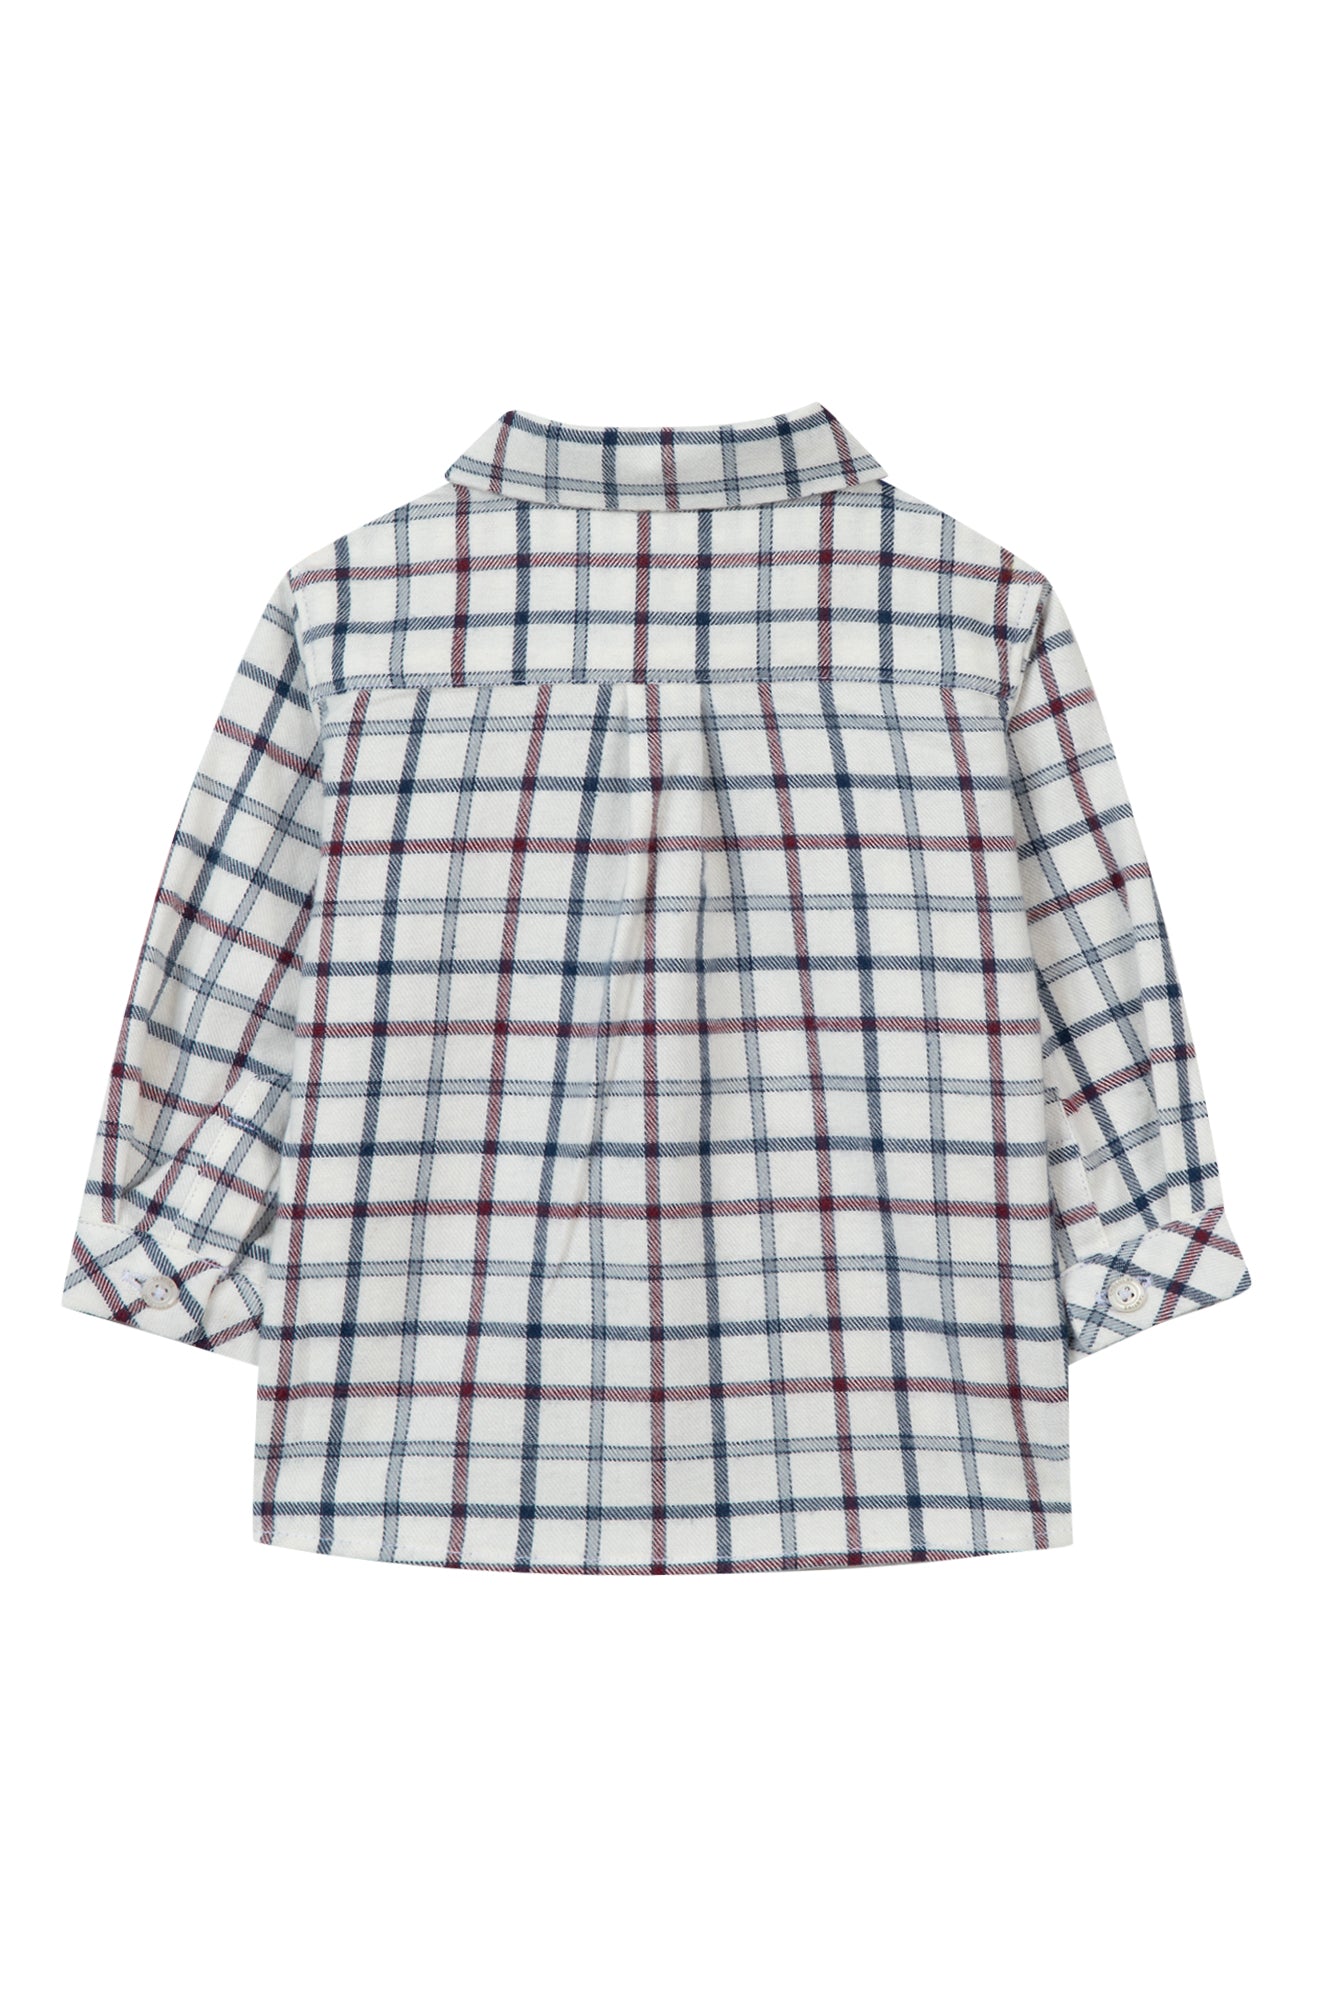 Tartine Boy's LS Flannel Check Button Up Shirt